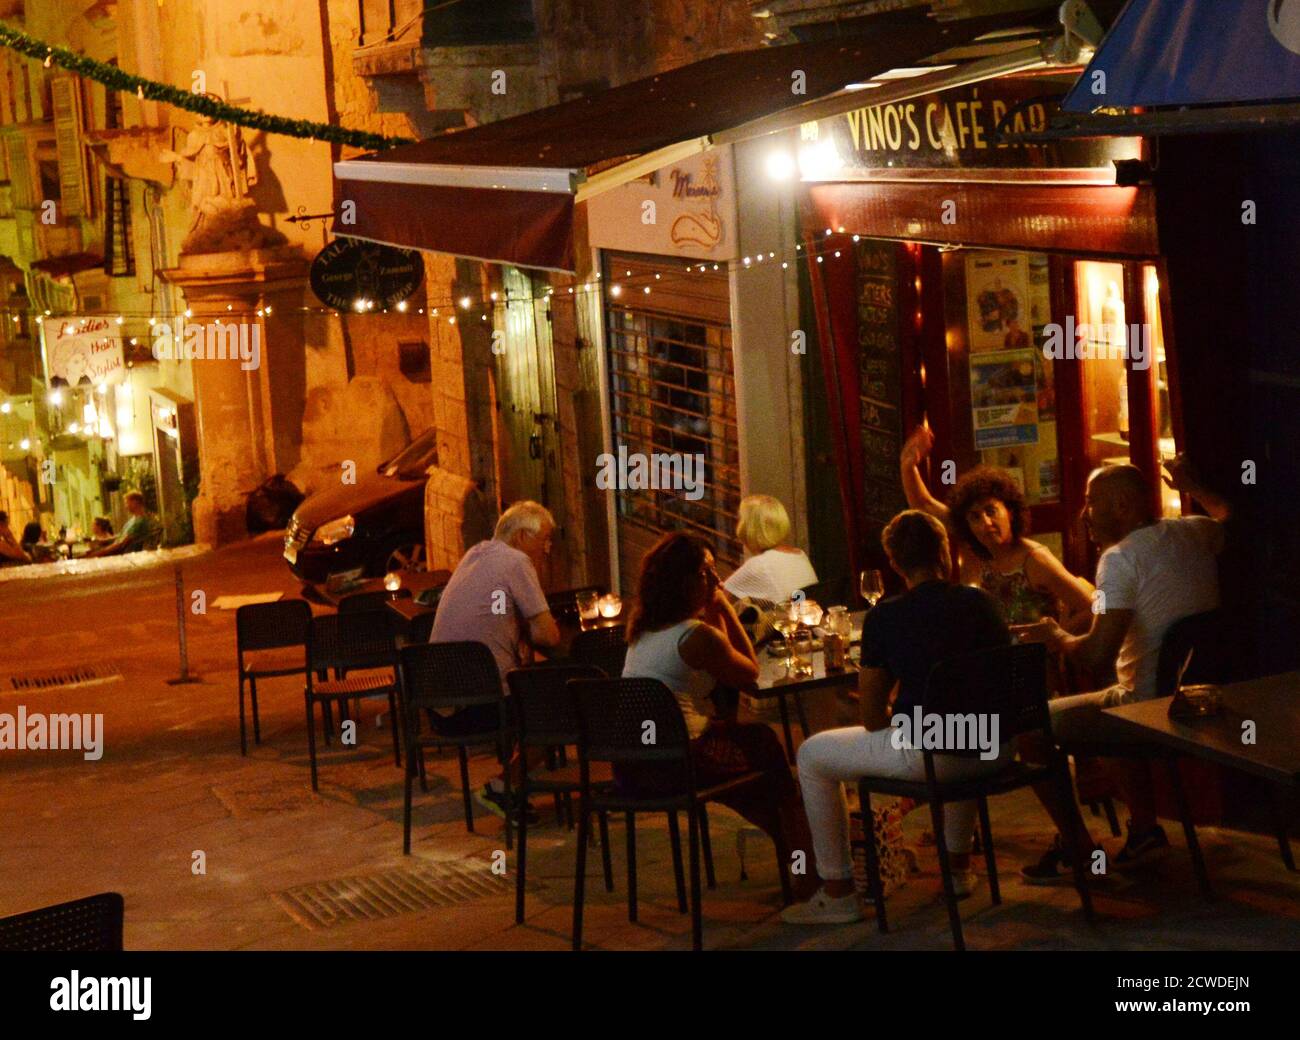 Vino's Cafe Bar in Valletta, Malta. Stock Photo